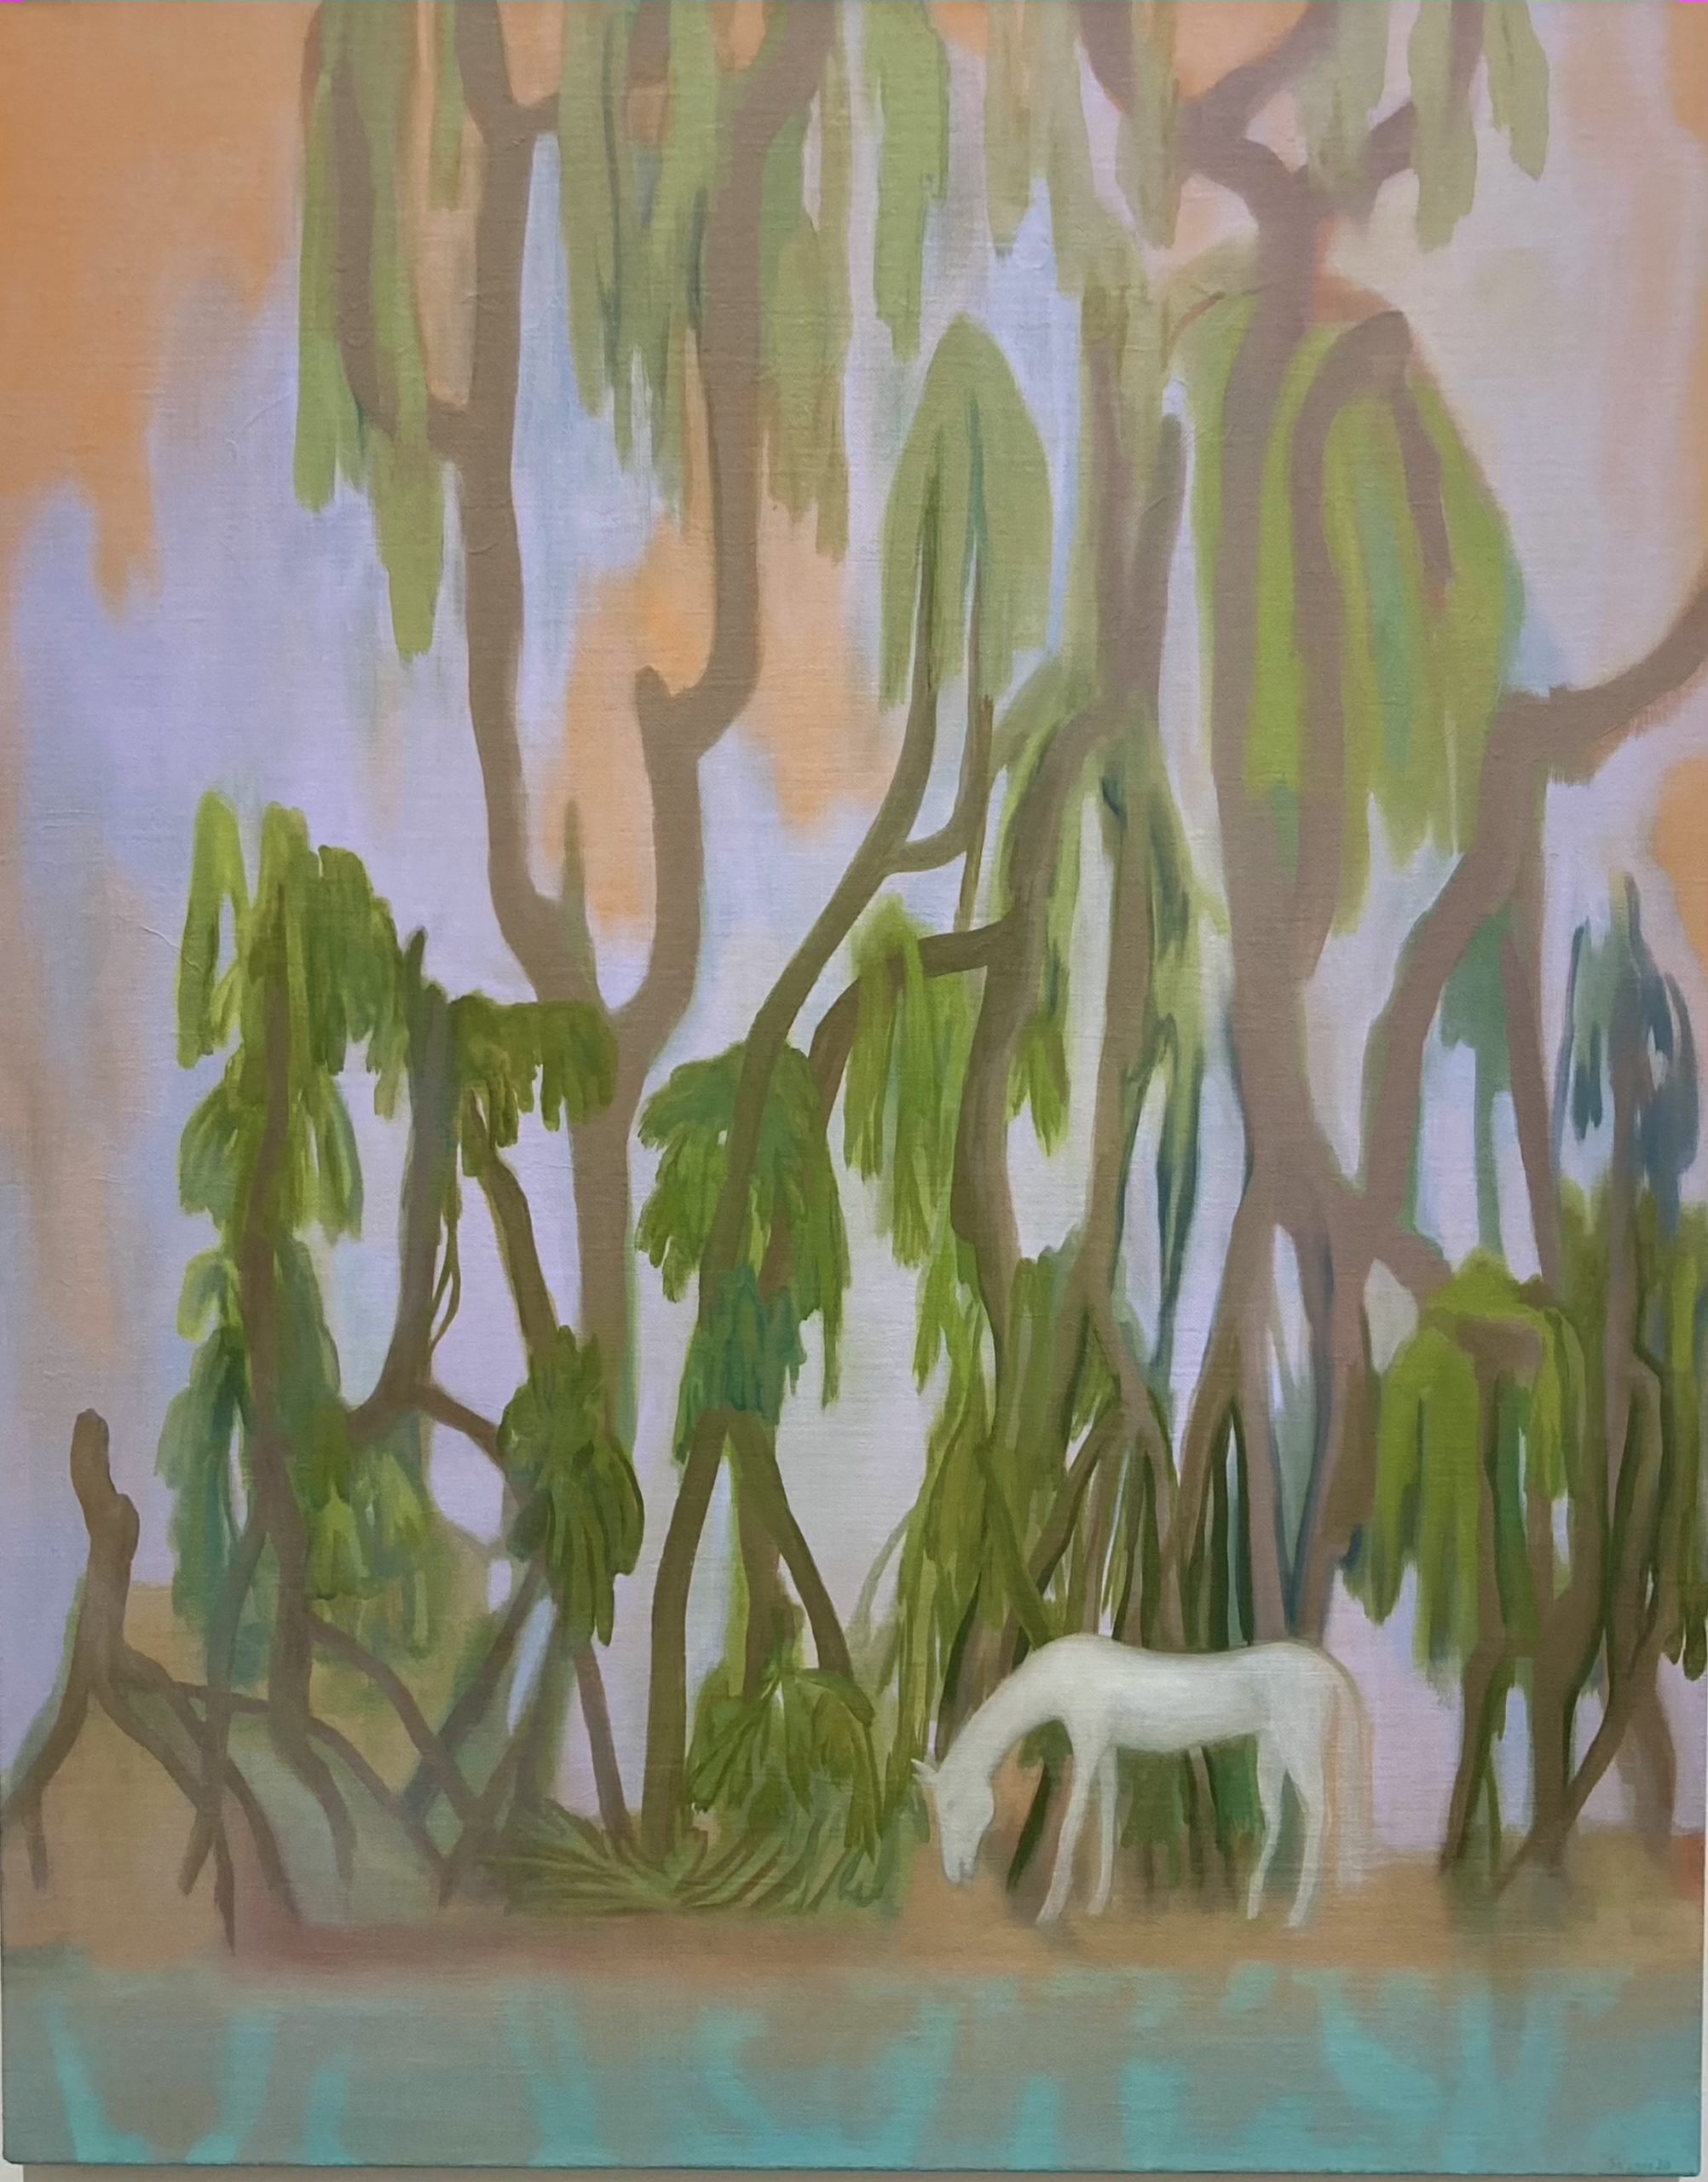 Martin Solymar, "Cabaillo Veijo (Old Horse)", 2020
oil on canvas, 95 x 75 cm
